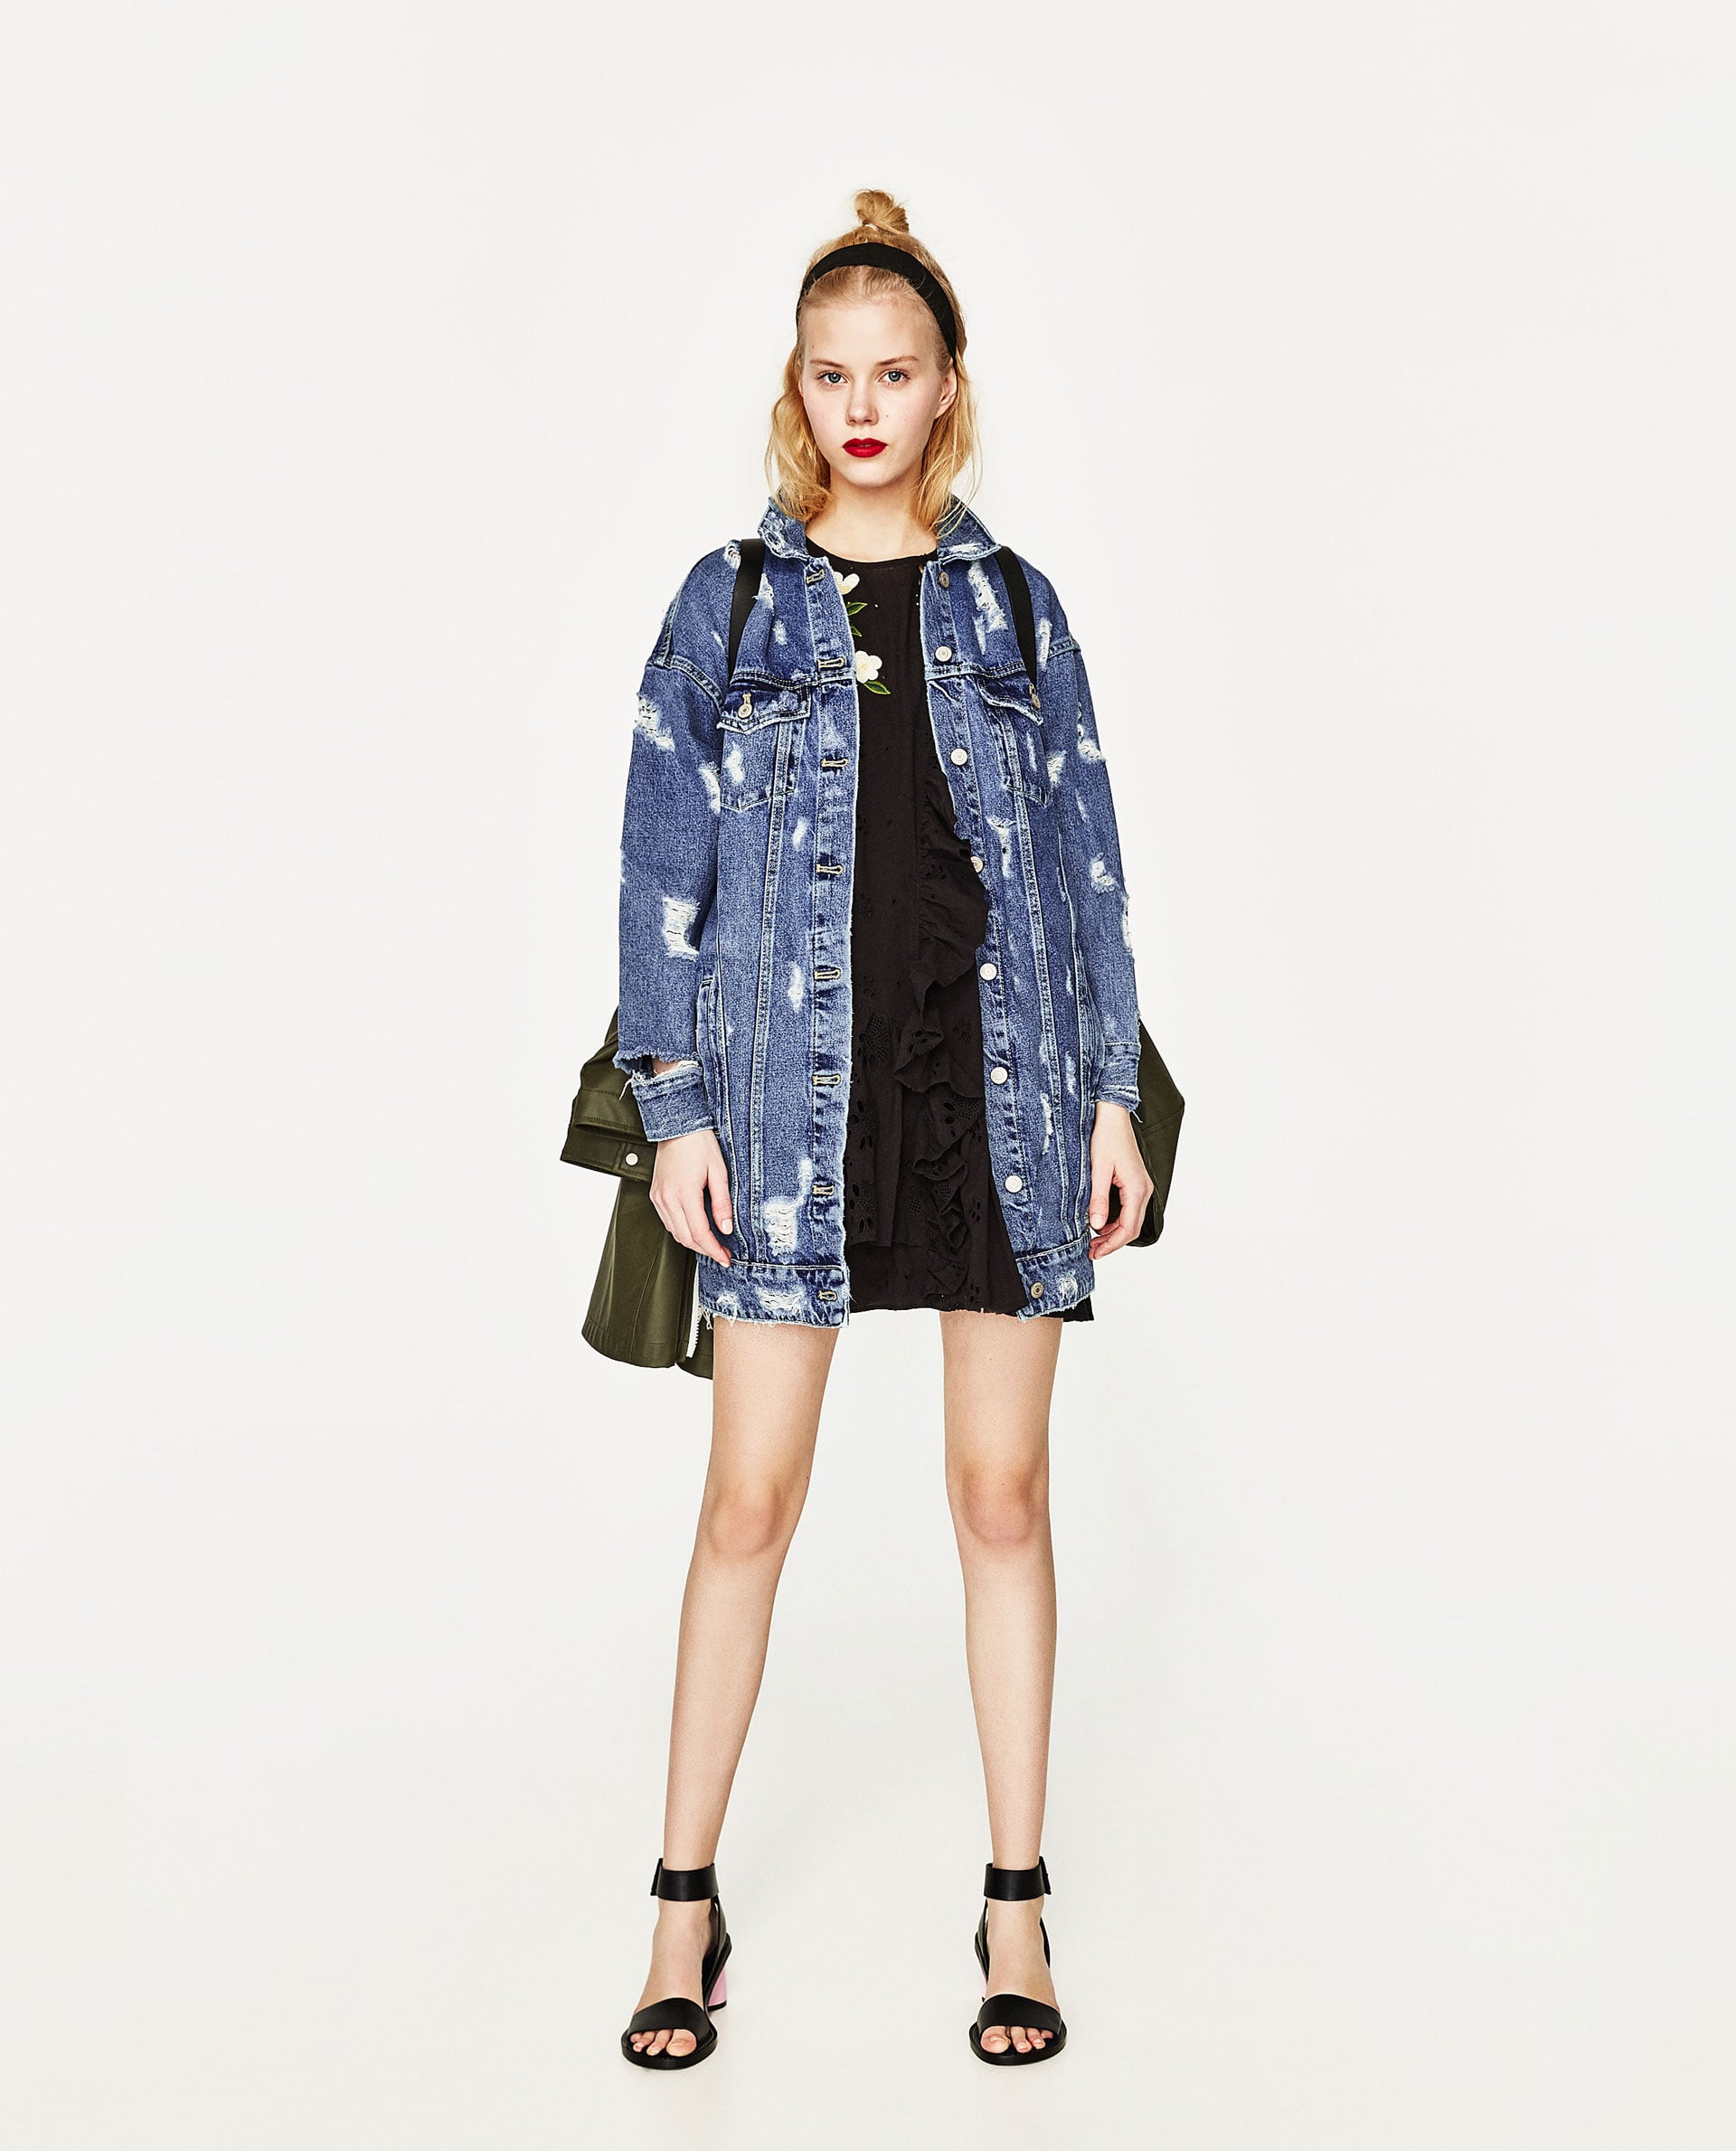 Zara Long Denim Jacket | The Very Best Denim You Could Possibly Shop at Zara Right Now POPSUGAR Fashion Photo 10